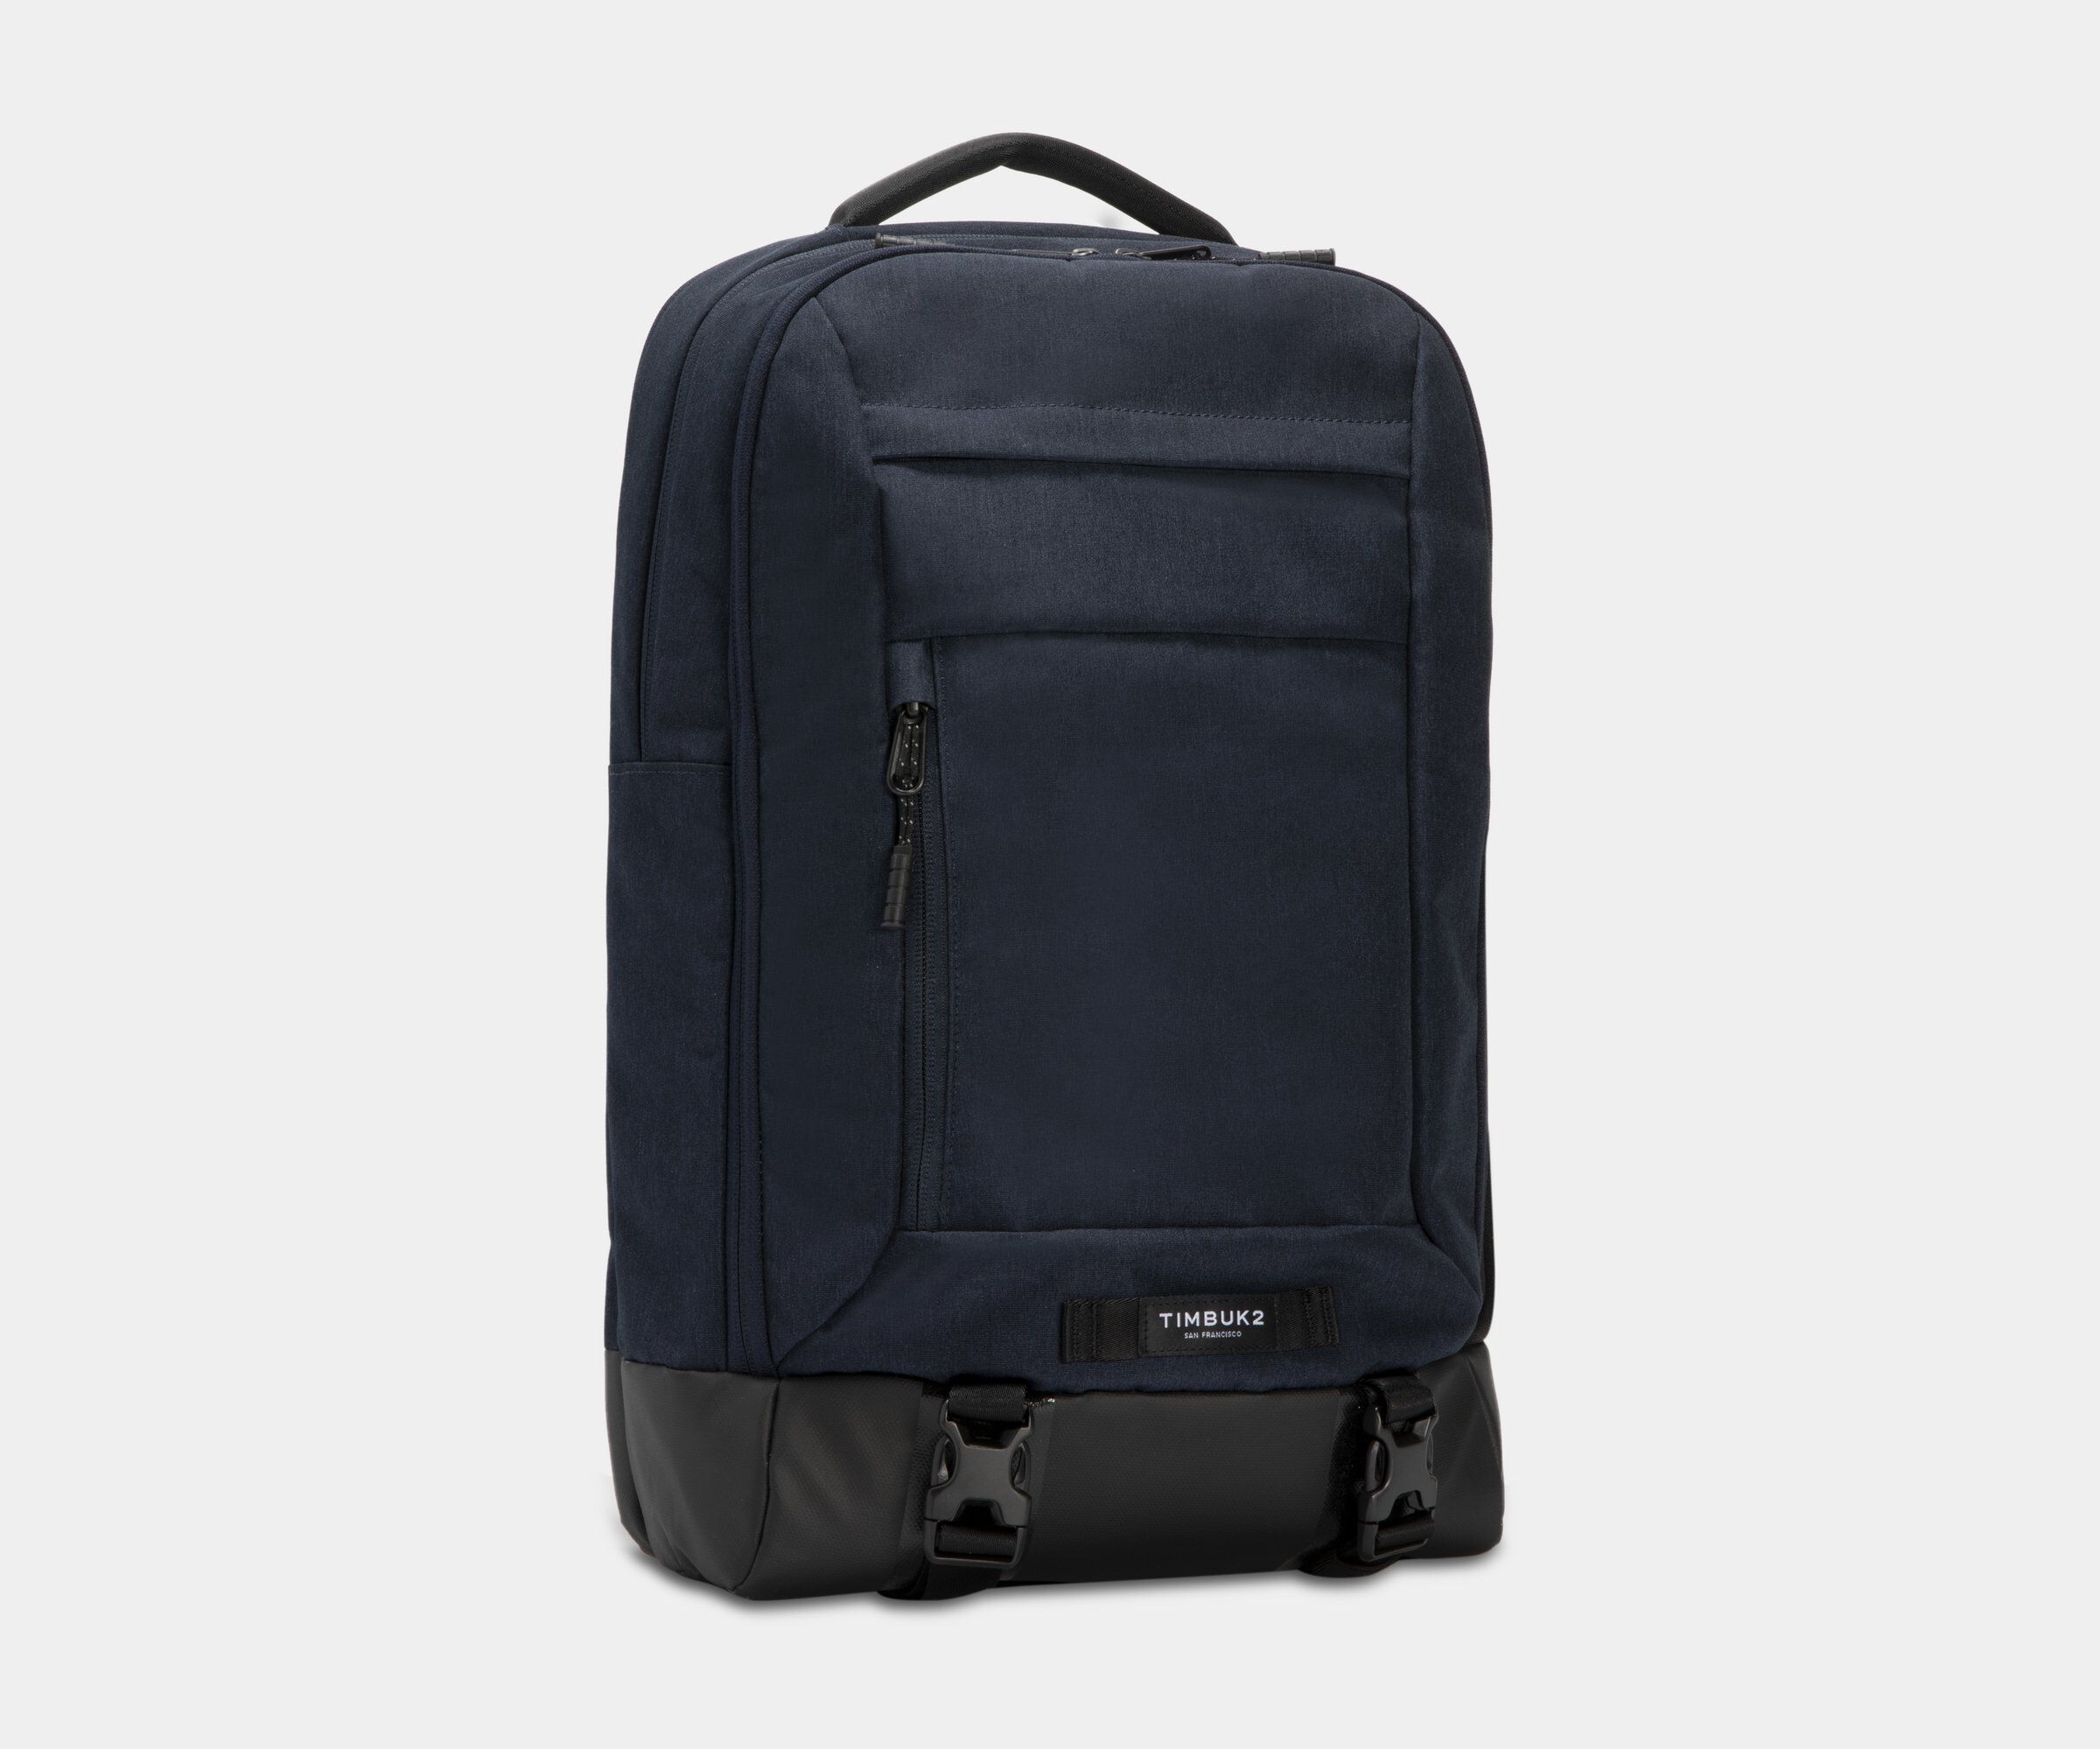 Branded Authority Laptop Backpack Deluxe Nightfall